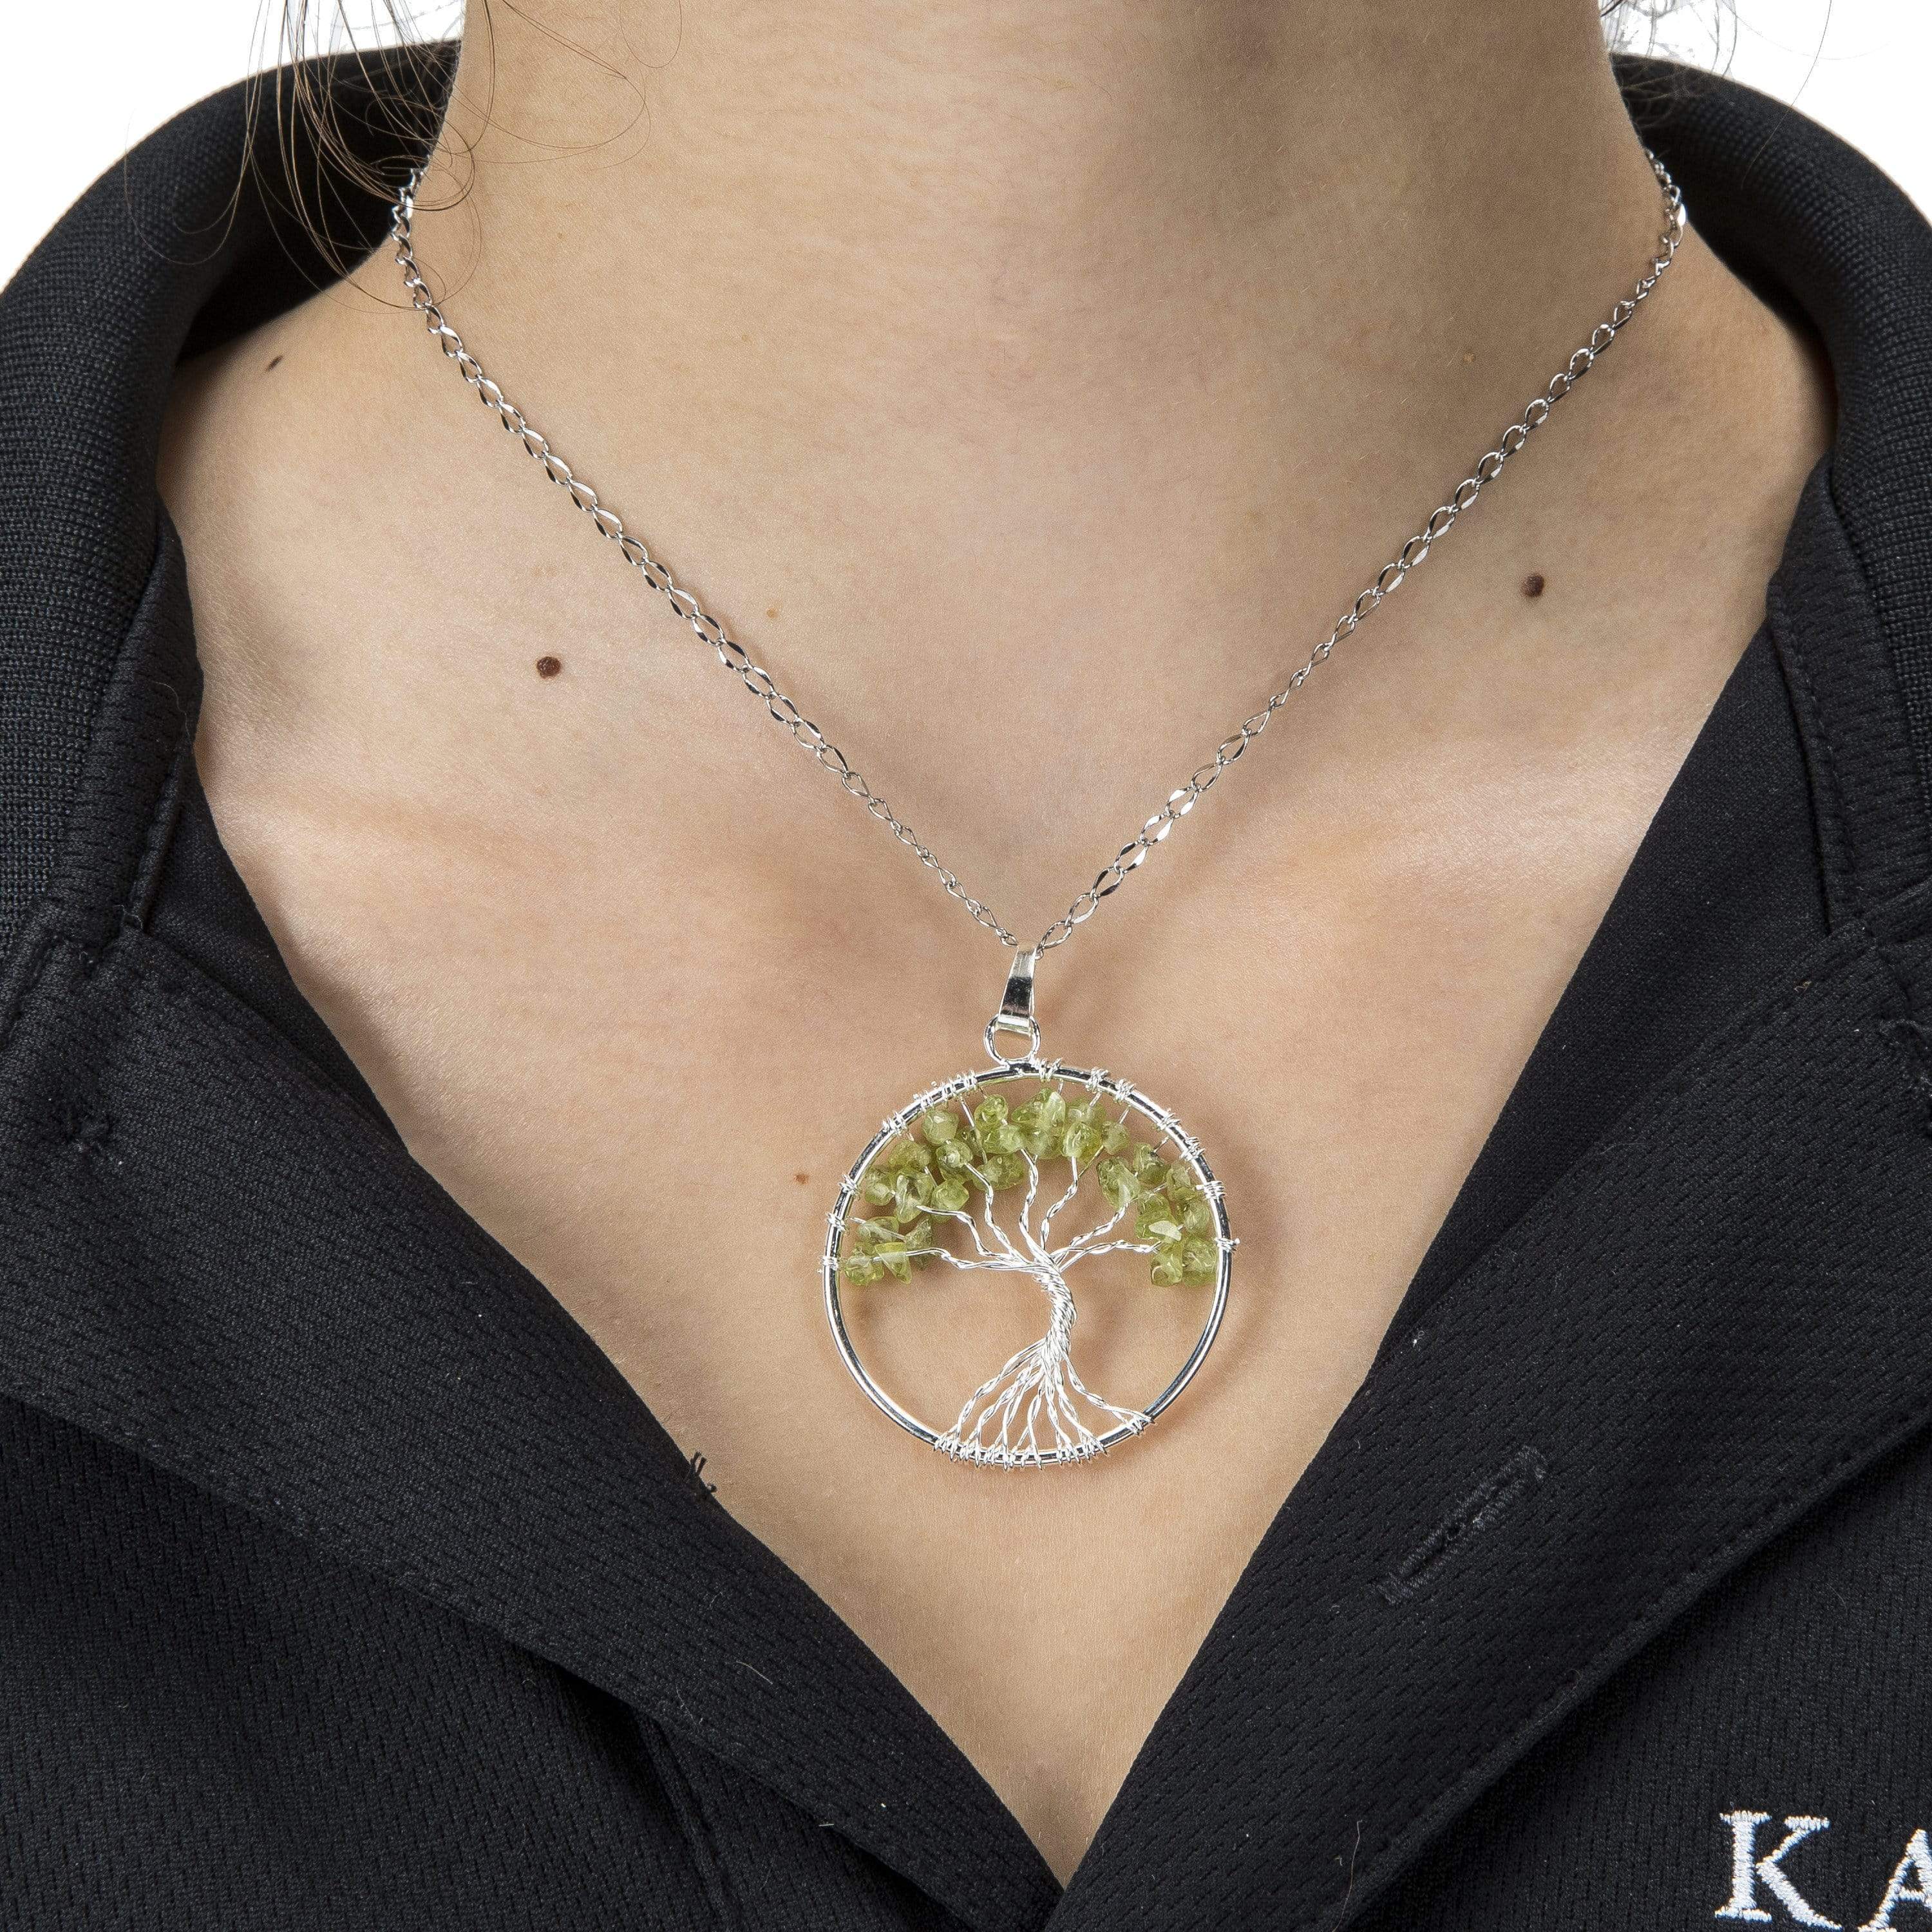 Kalifano Crystal Jewelry Peridot Chakra Gemstone Tree of Life Necklace & Stainless Steel Chain CJCN20-PGR